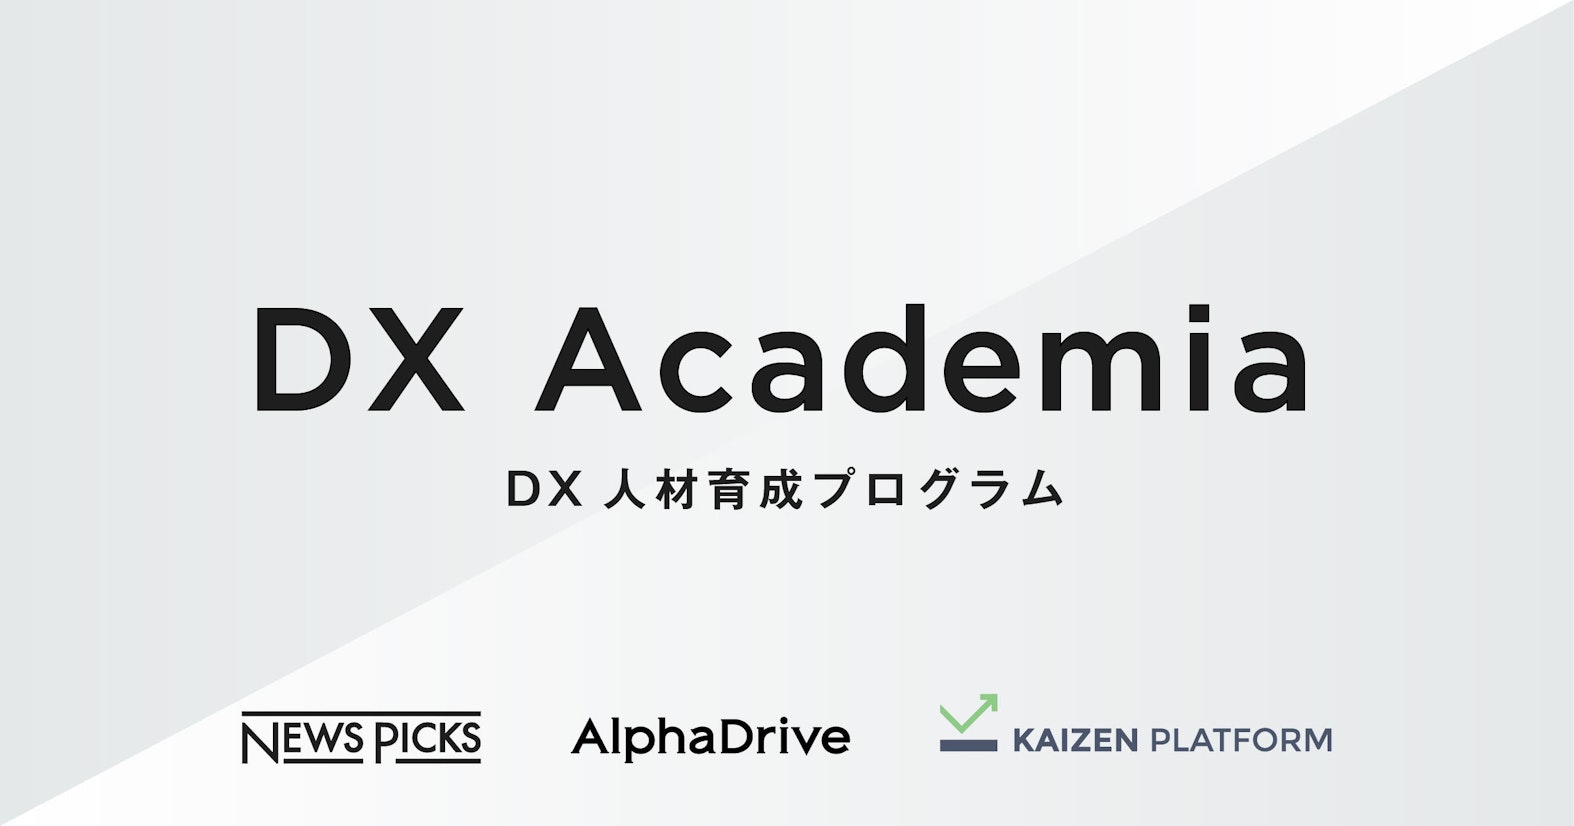 NewsPicksとAlphaDrive、企業の実践型DX人材育成プログラム「DX Academia」をKaizen Platformと共同開発。第一弾として東京海上日動が導入